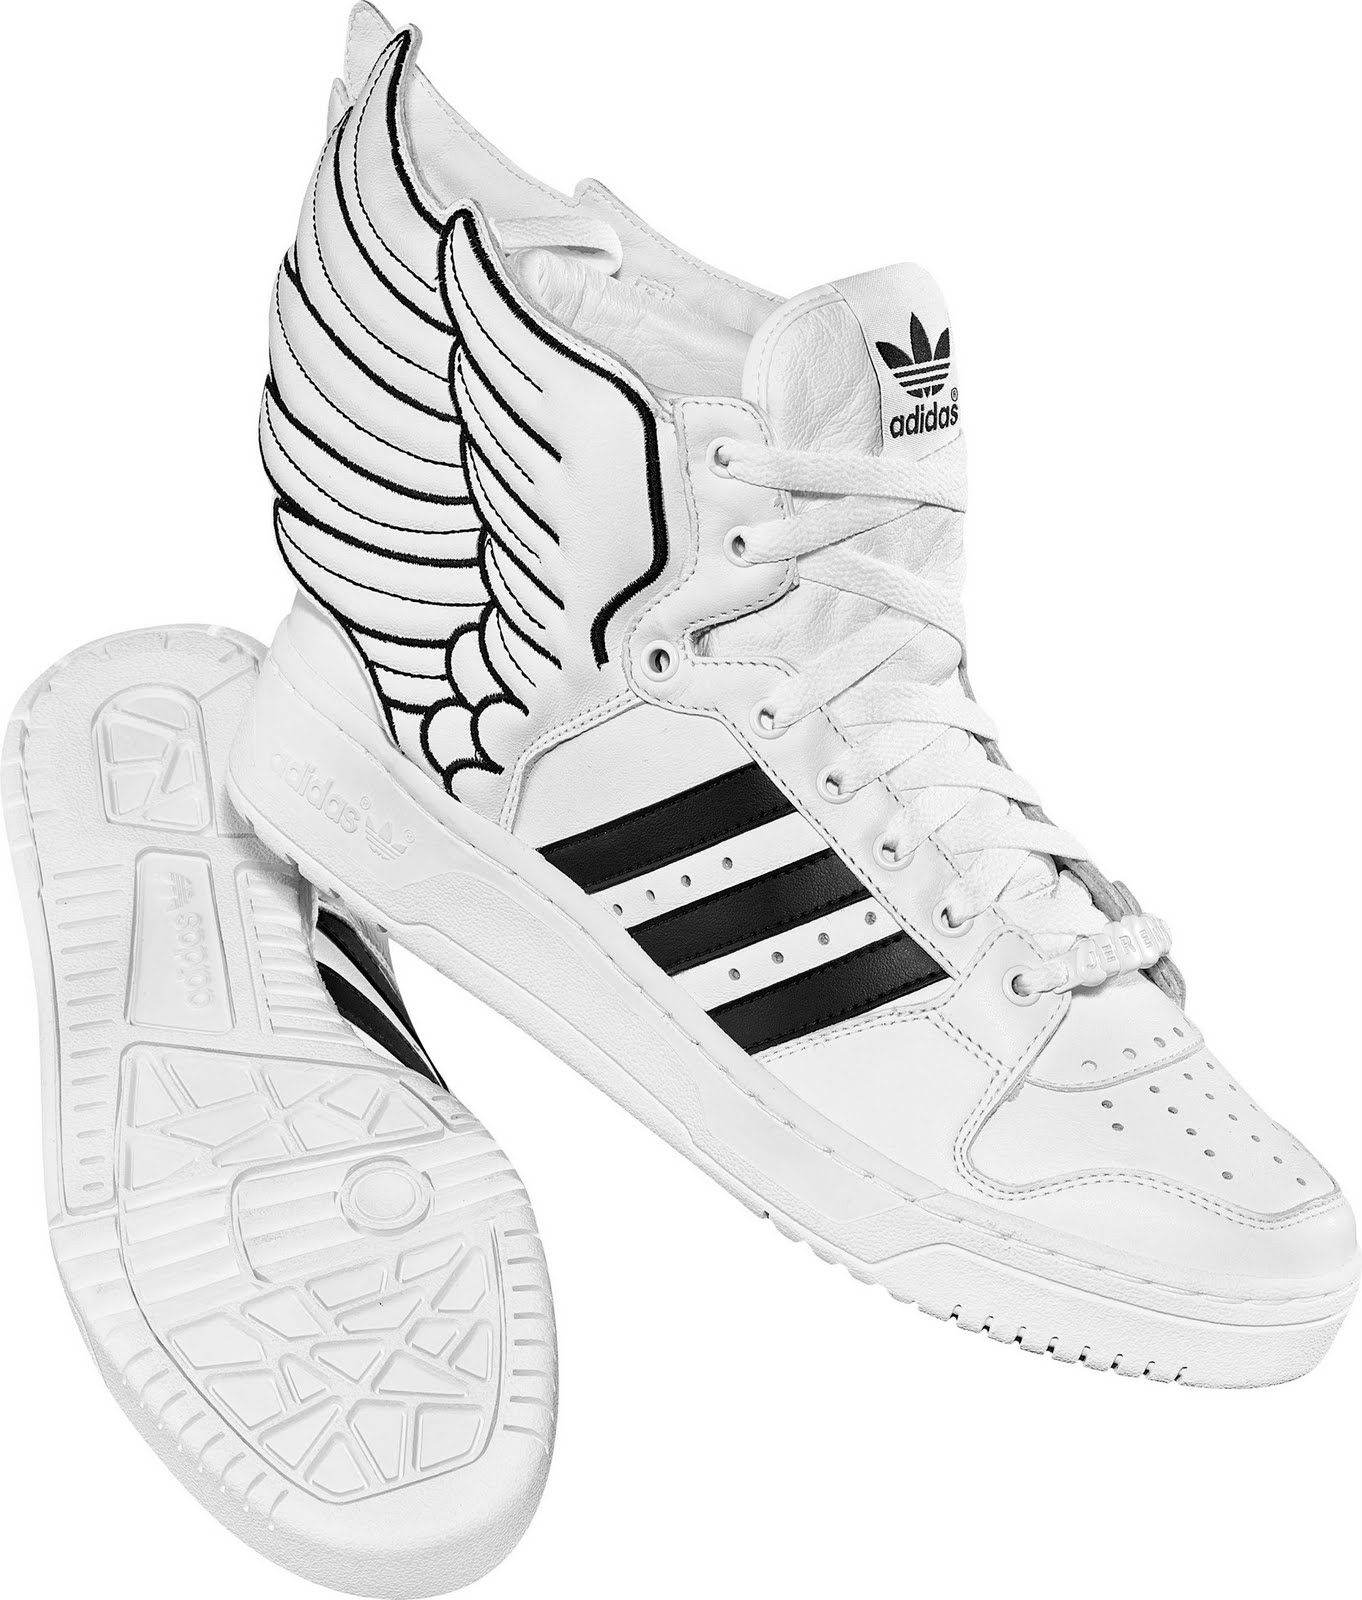 Winged Adidas Shoes